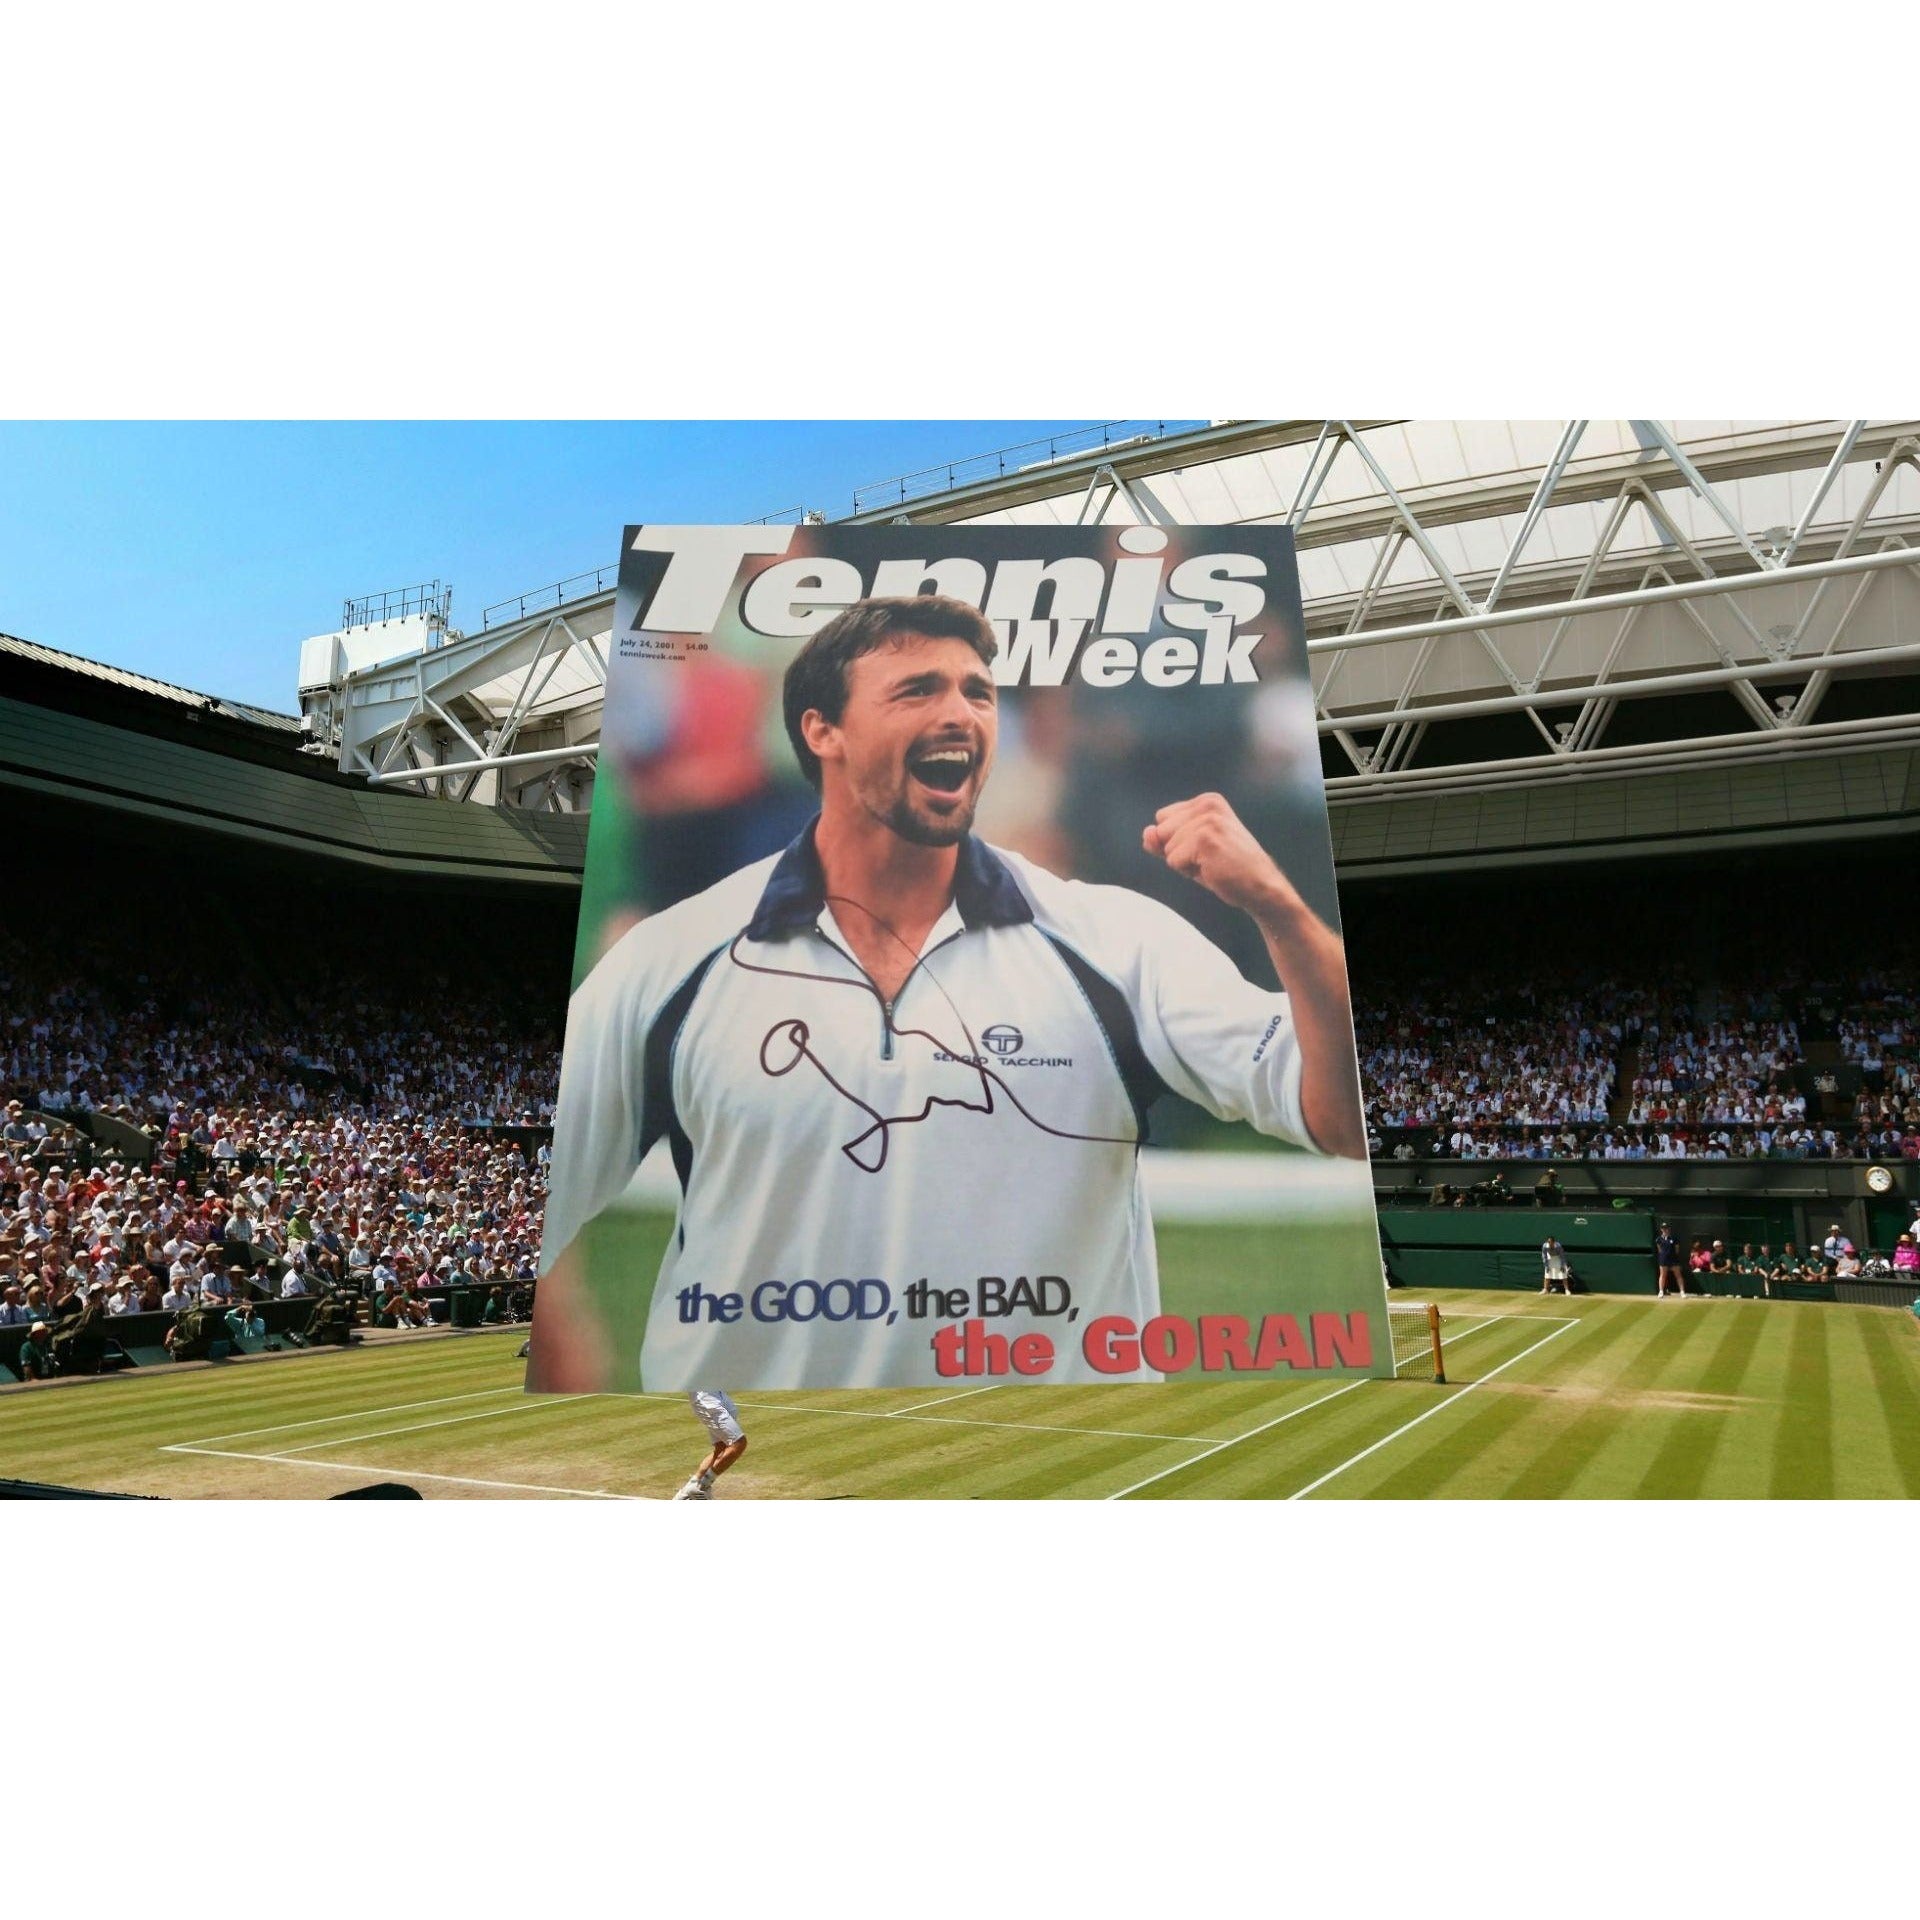 Goran ivanisevic tennis star signed magazine